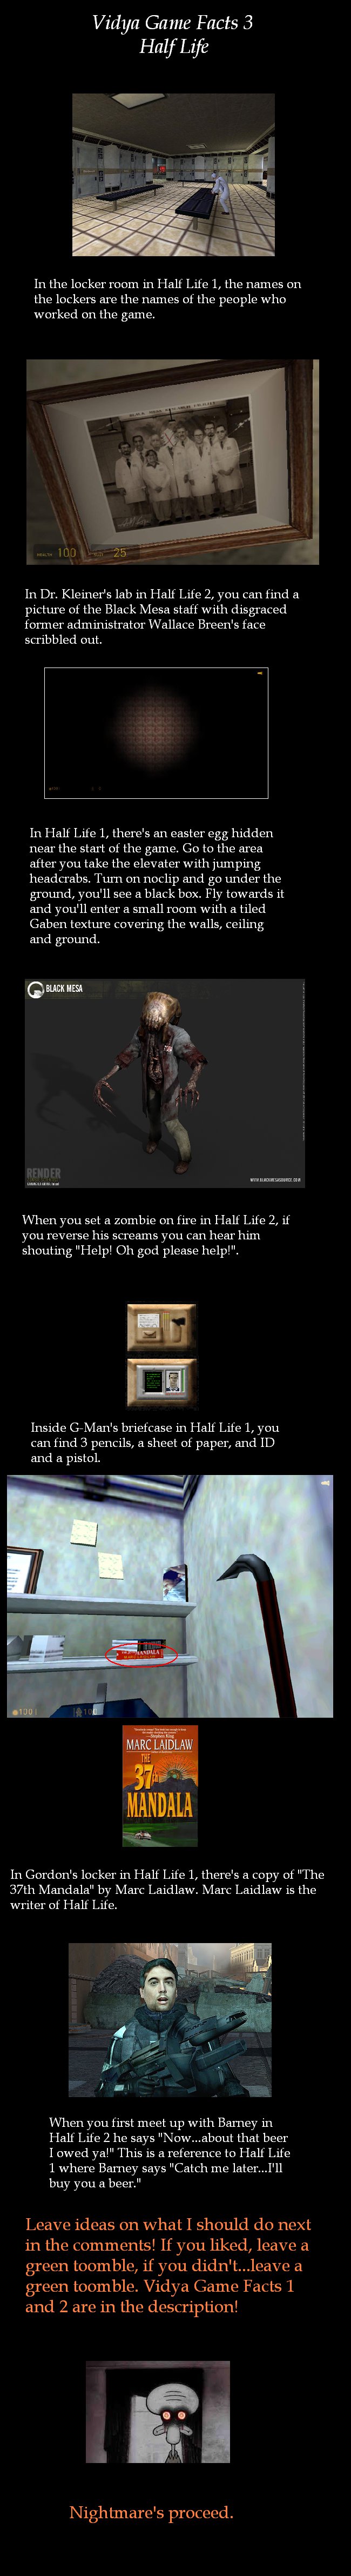 Half Life-Vidya Game Facts 3